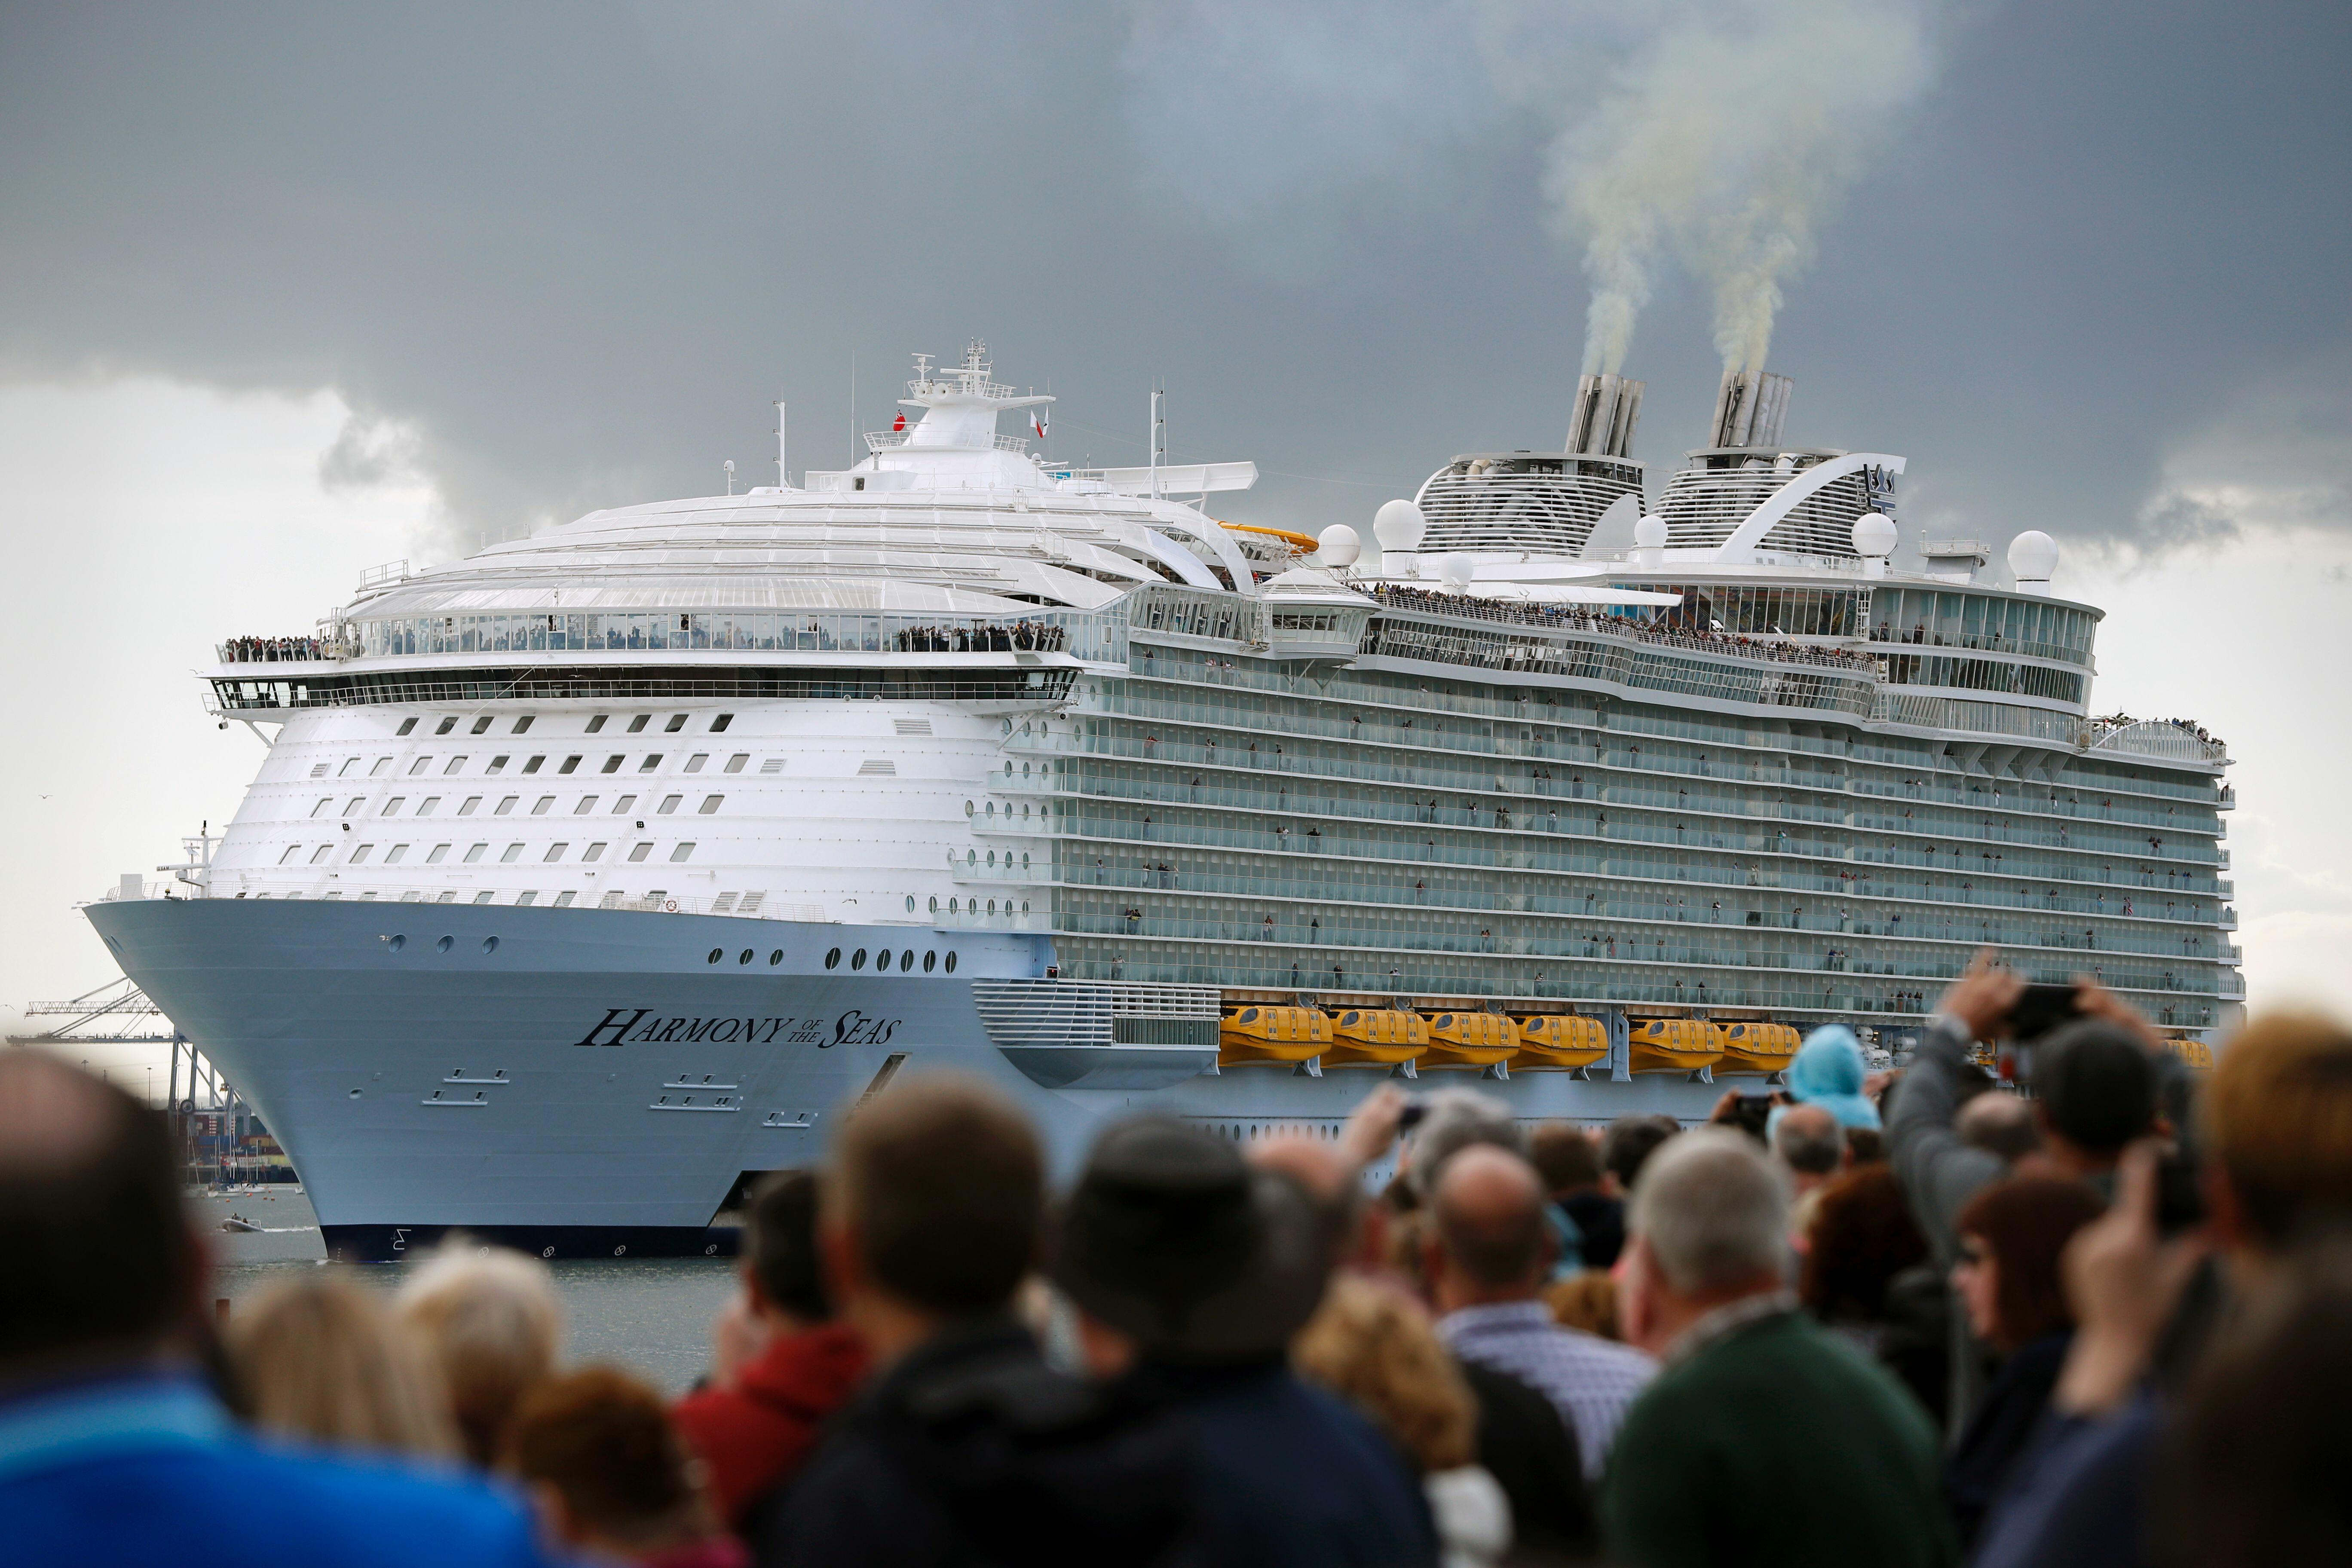 cruise ship hits dock 2021